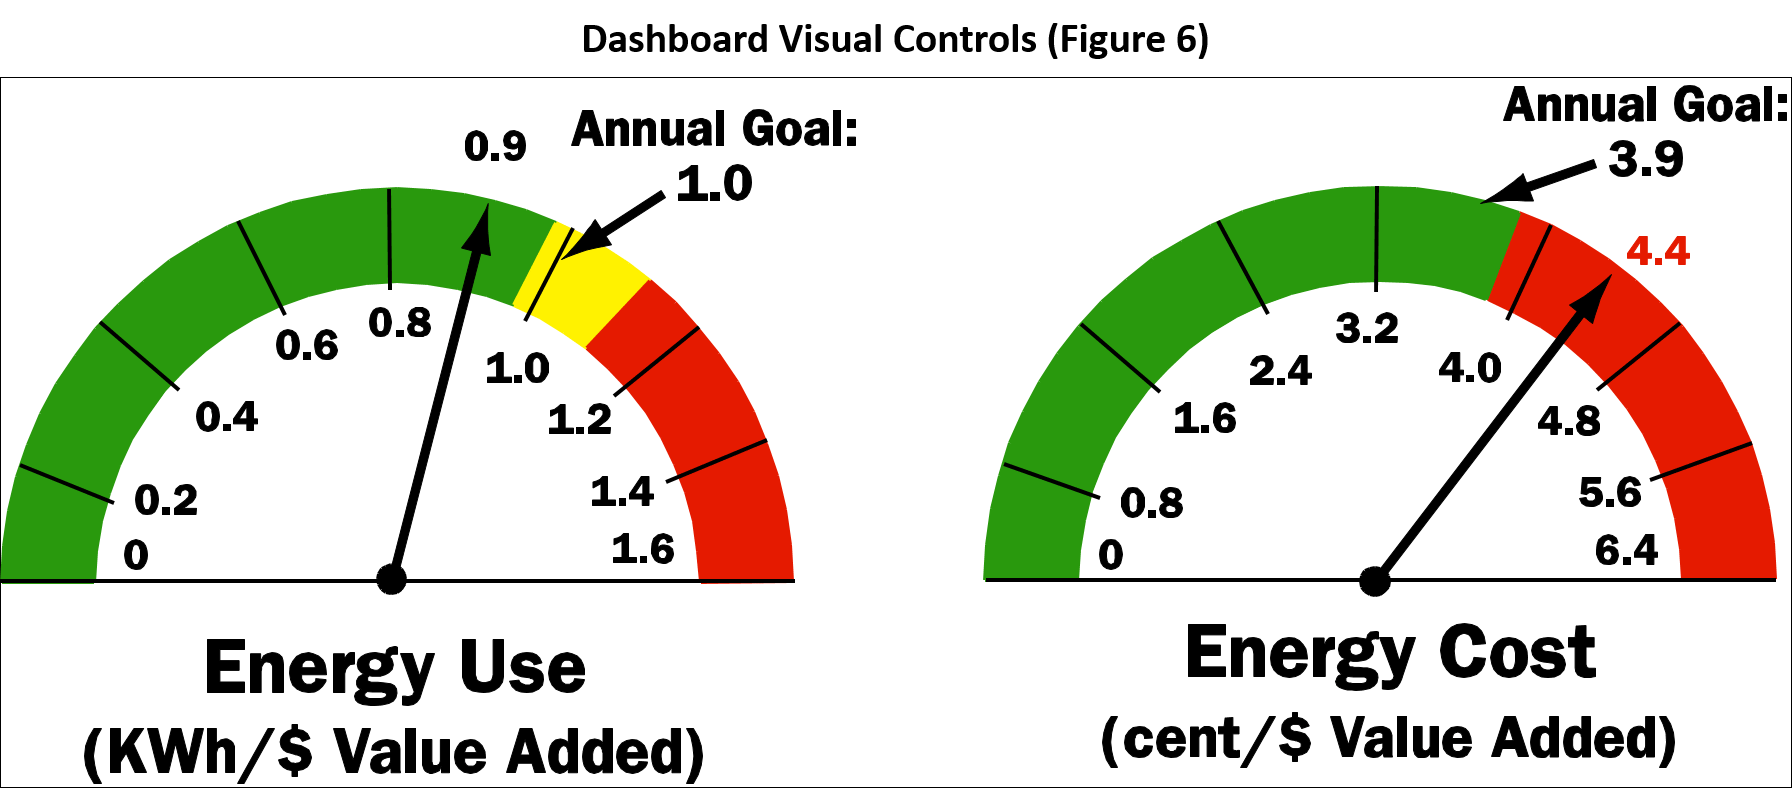 Dashboard Visual Controls (Figure 6)